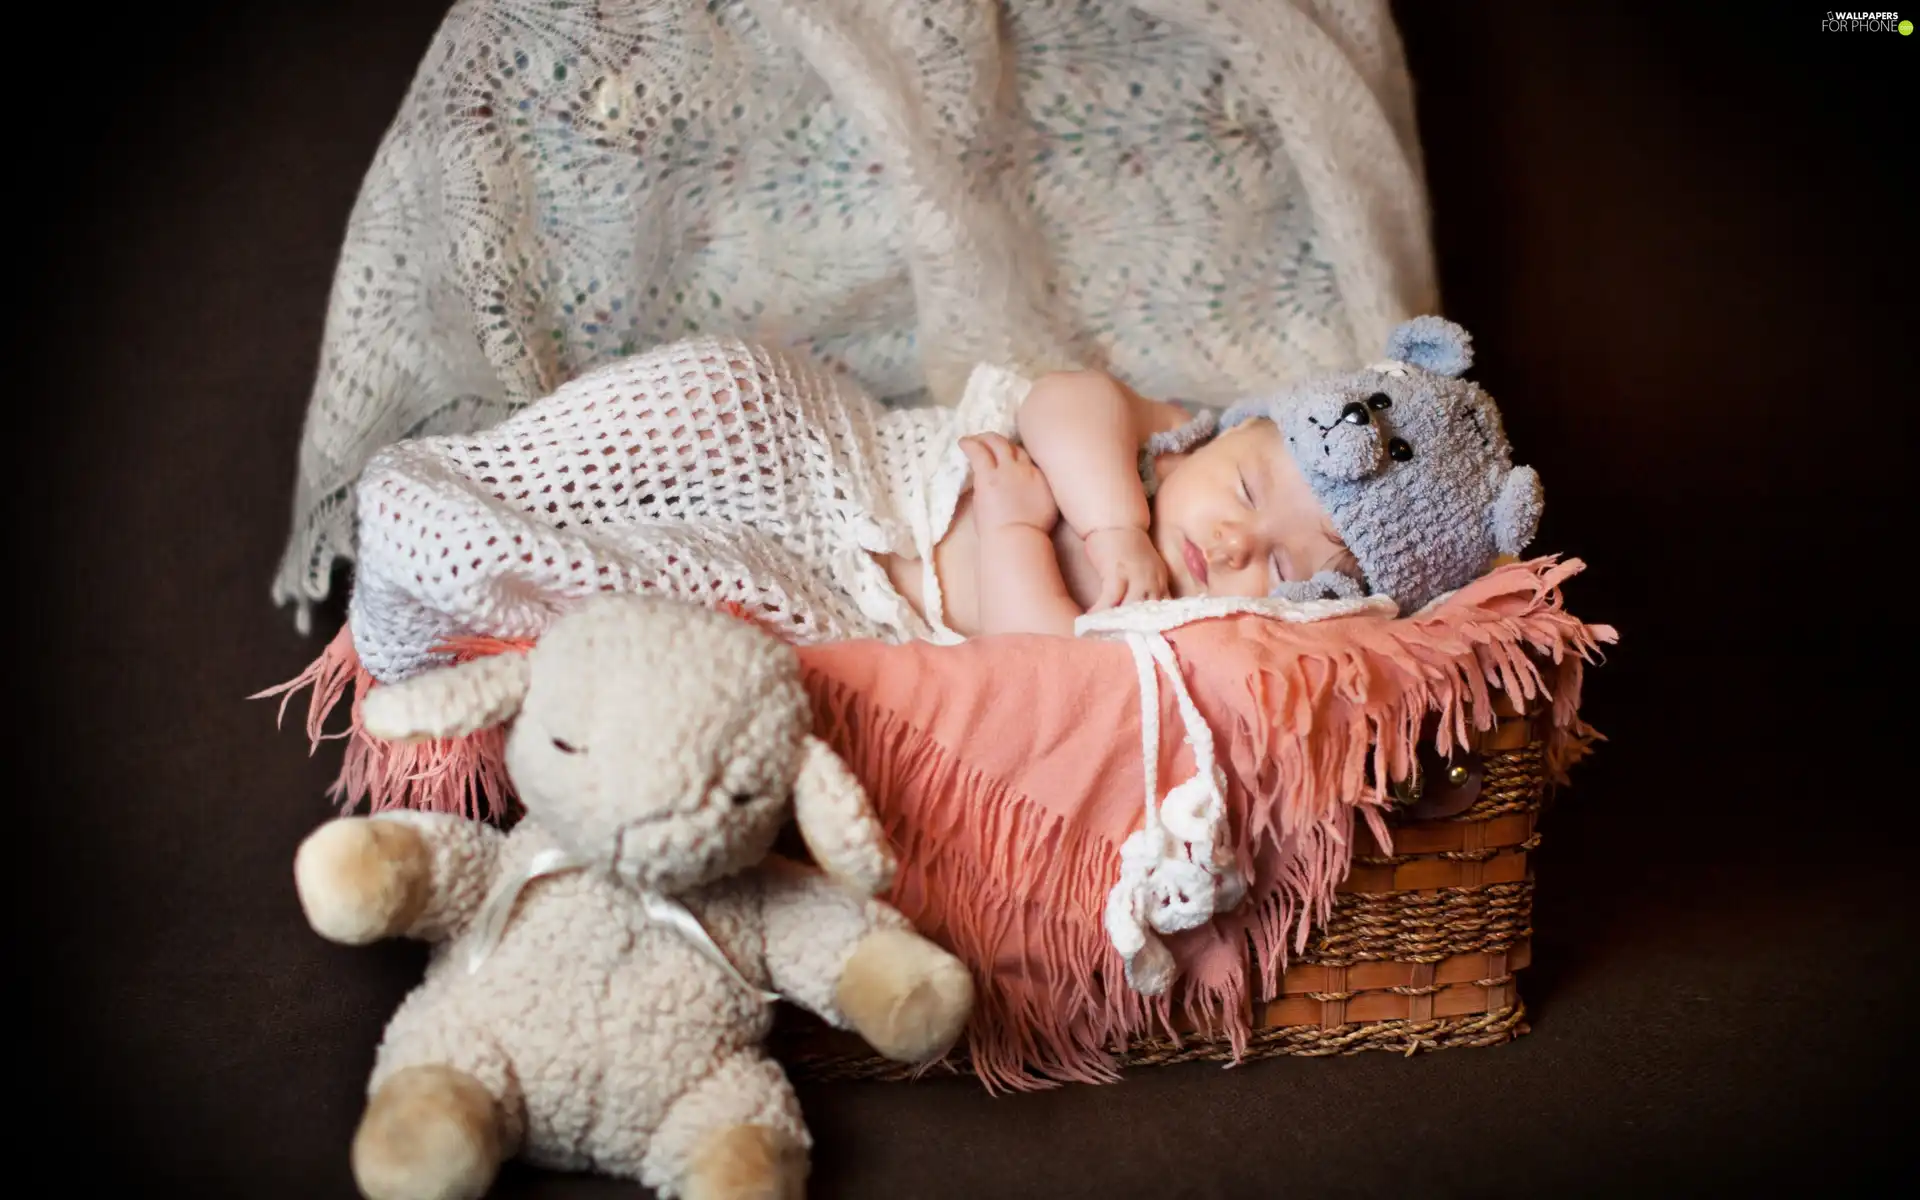 Bonnet, Blanket, toy, hosiery, plush toy, Kid, Sleeping, basket